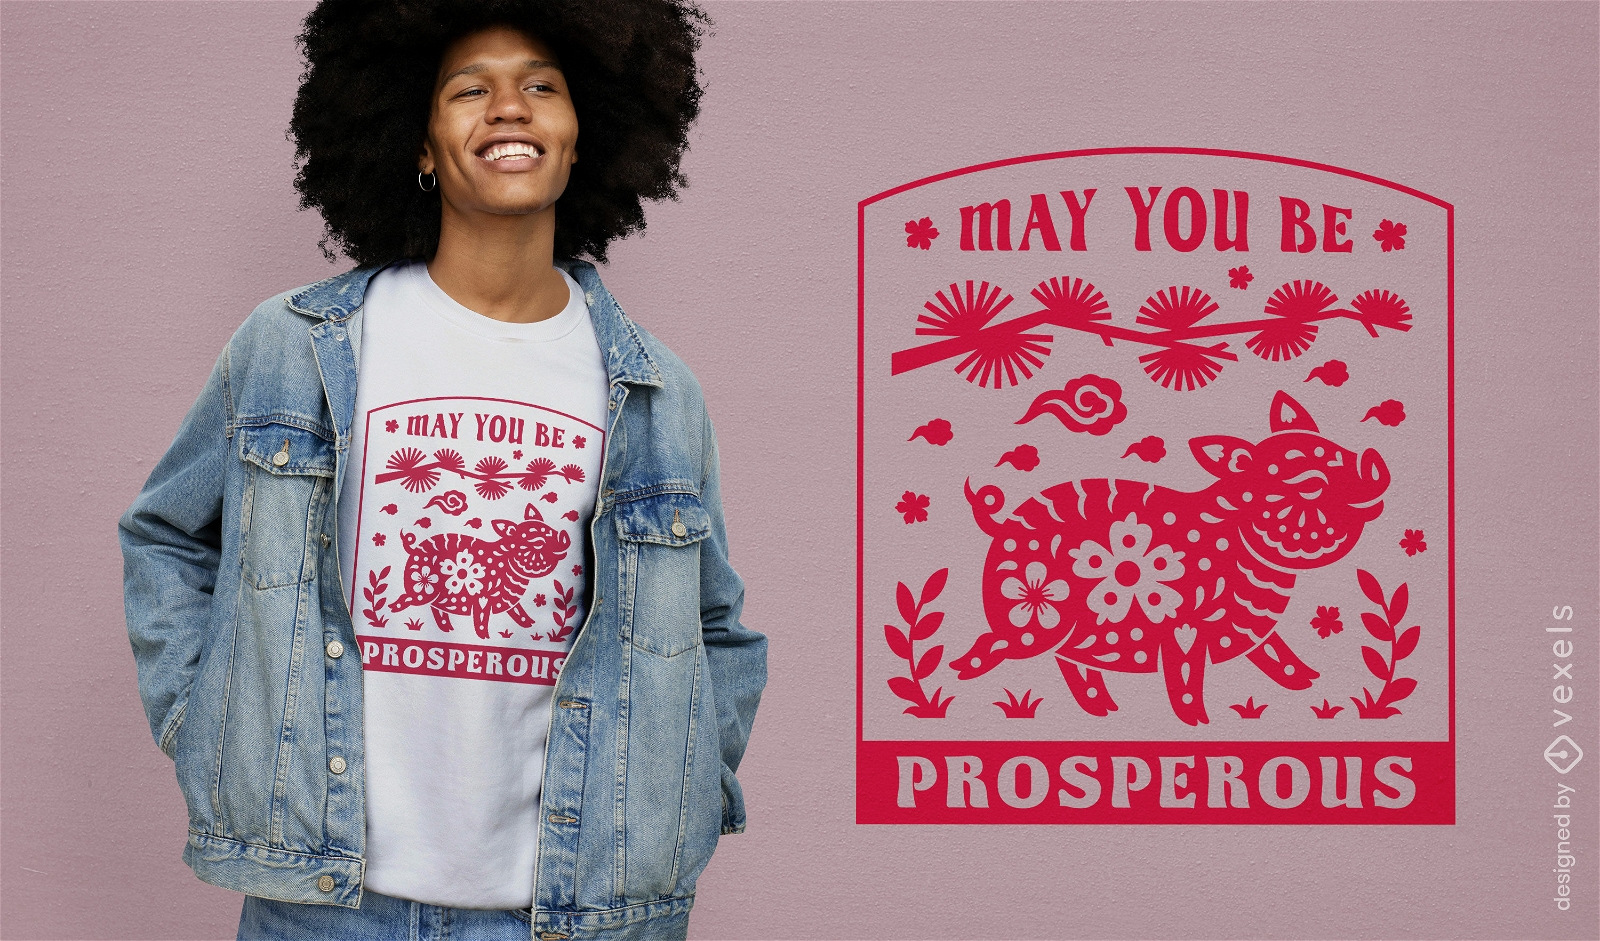 Dise?o de camiseta de cerdo deseo de prosperidad.